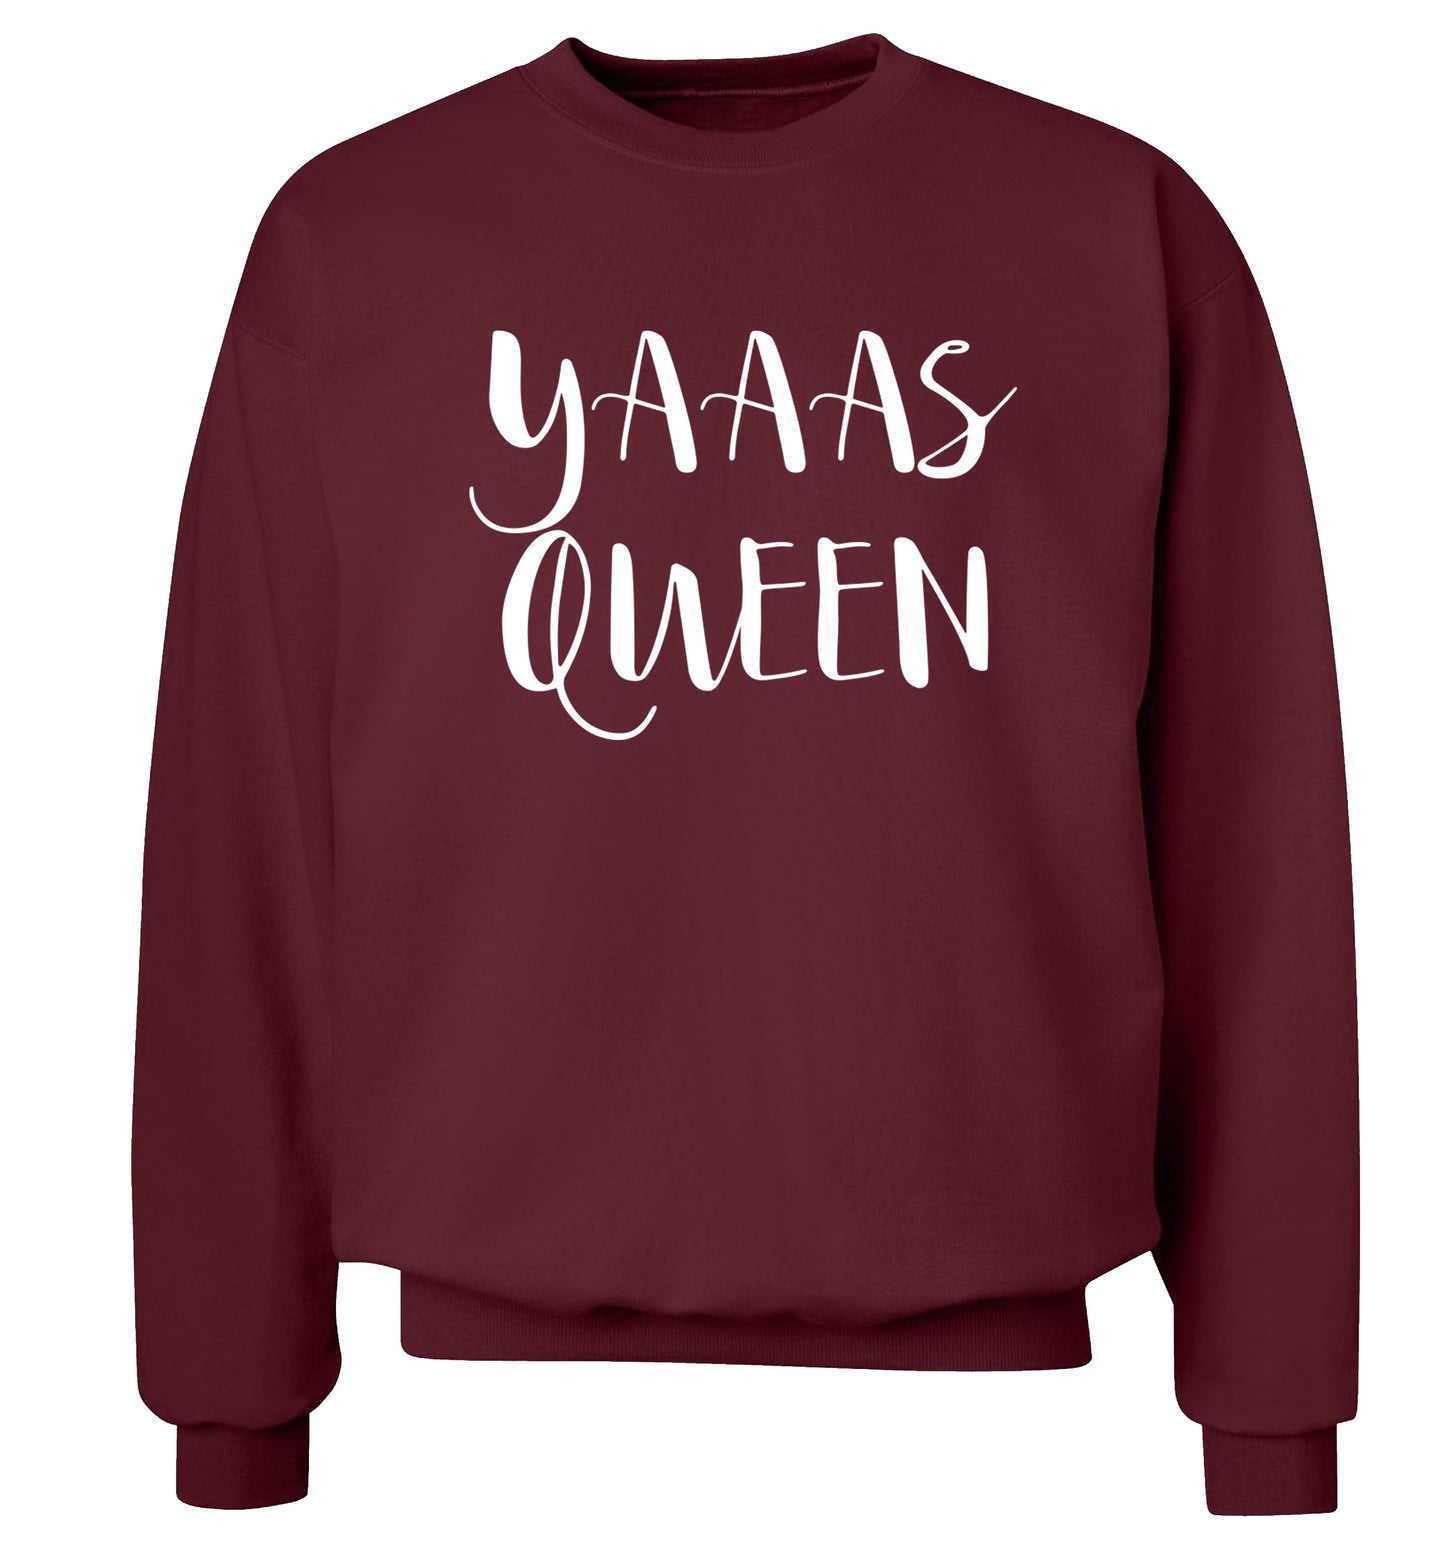 Yas Queen Adult's unisex maroon Sweater 2XL